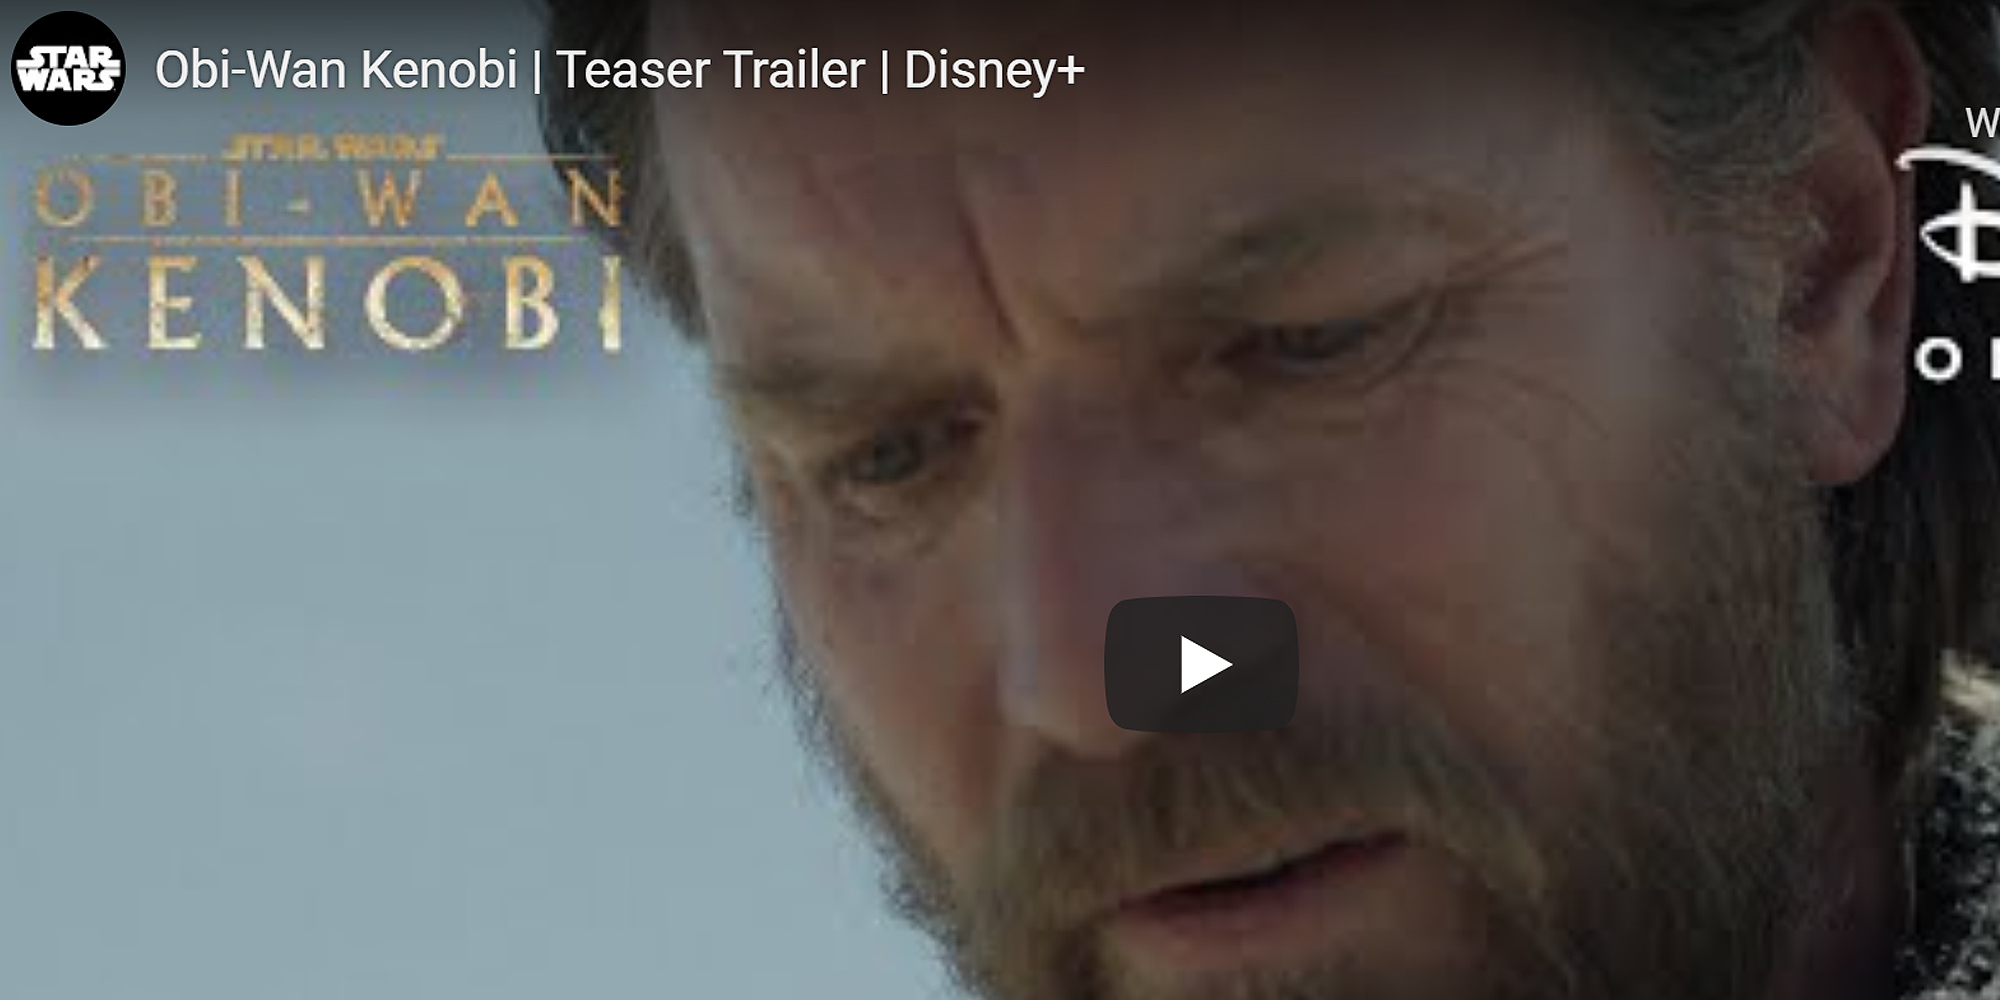 Watch The Obi-Wan Kenobi Teaser Trailer!